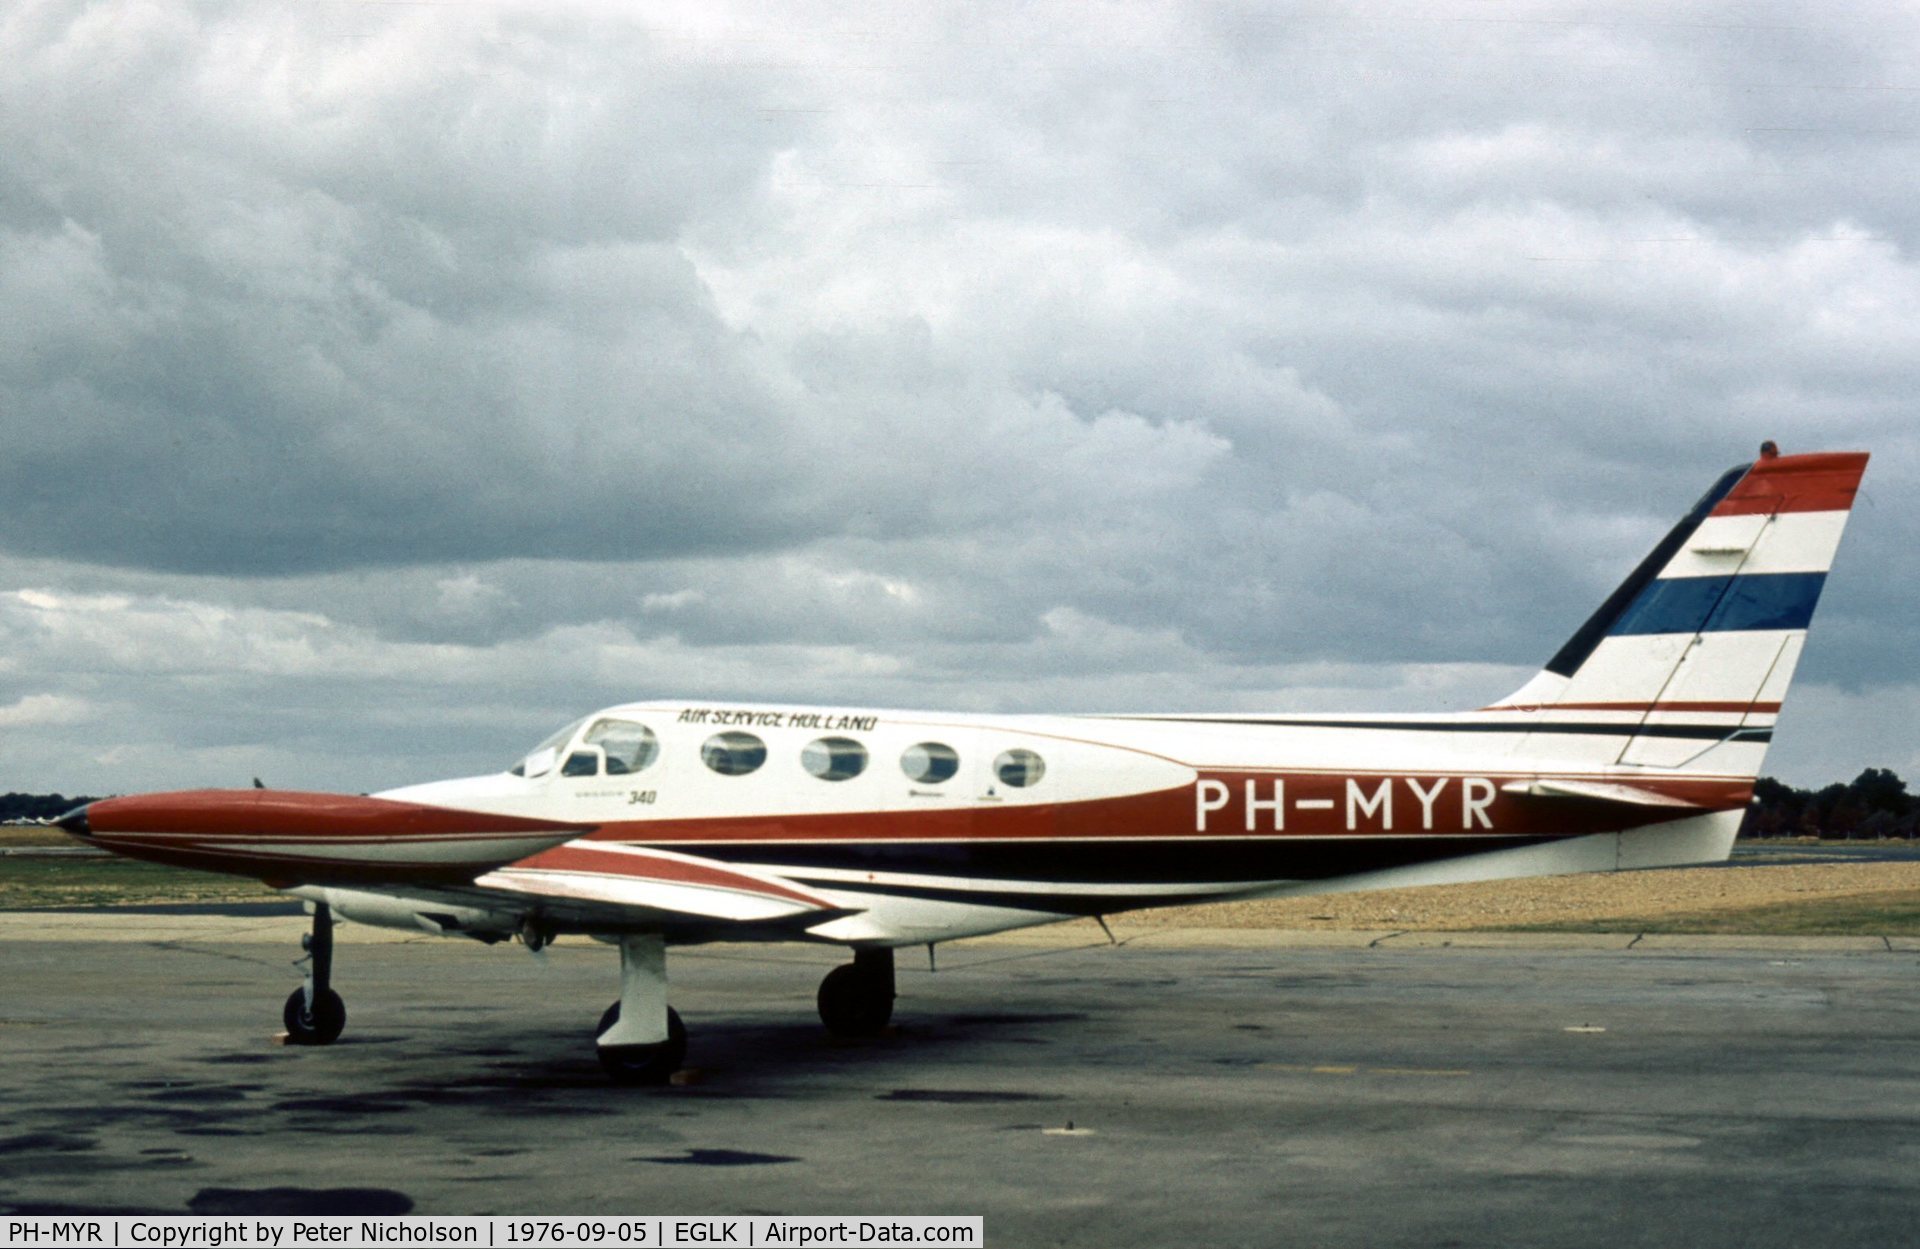 PH-MYR, 1971 Cessna 340 C/N 340-0023, Cessna 340 of Air Service Holland seen at Blackbushe in September 1976.